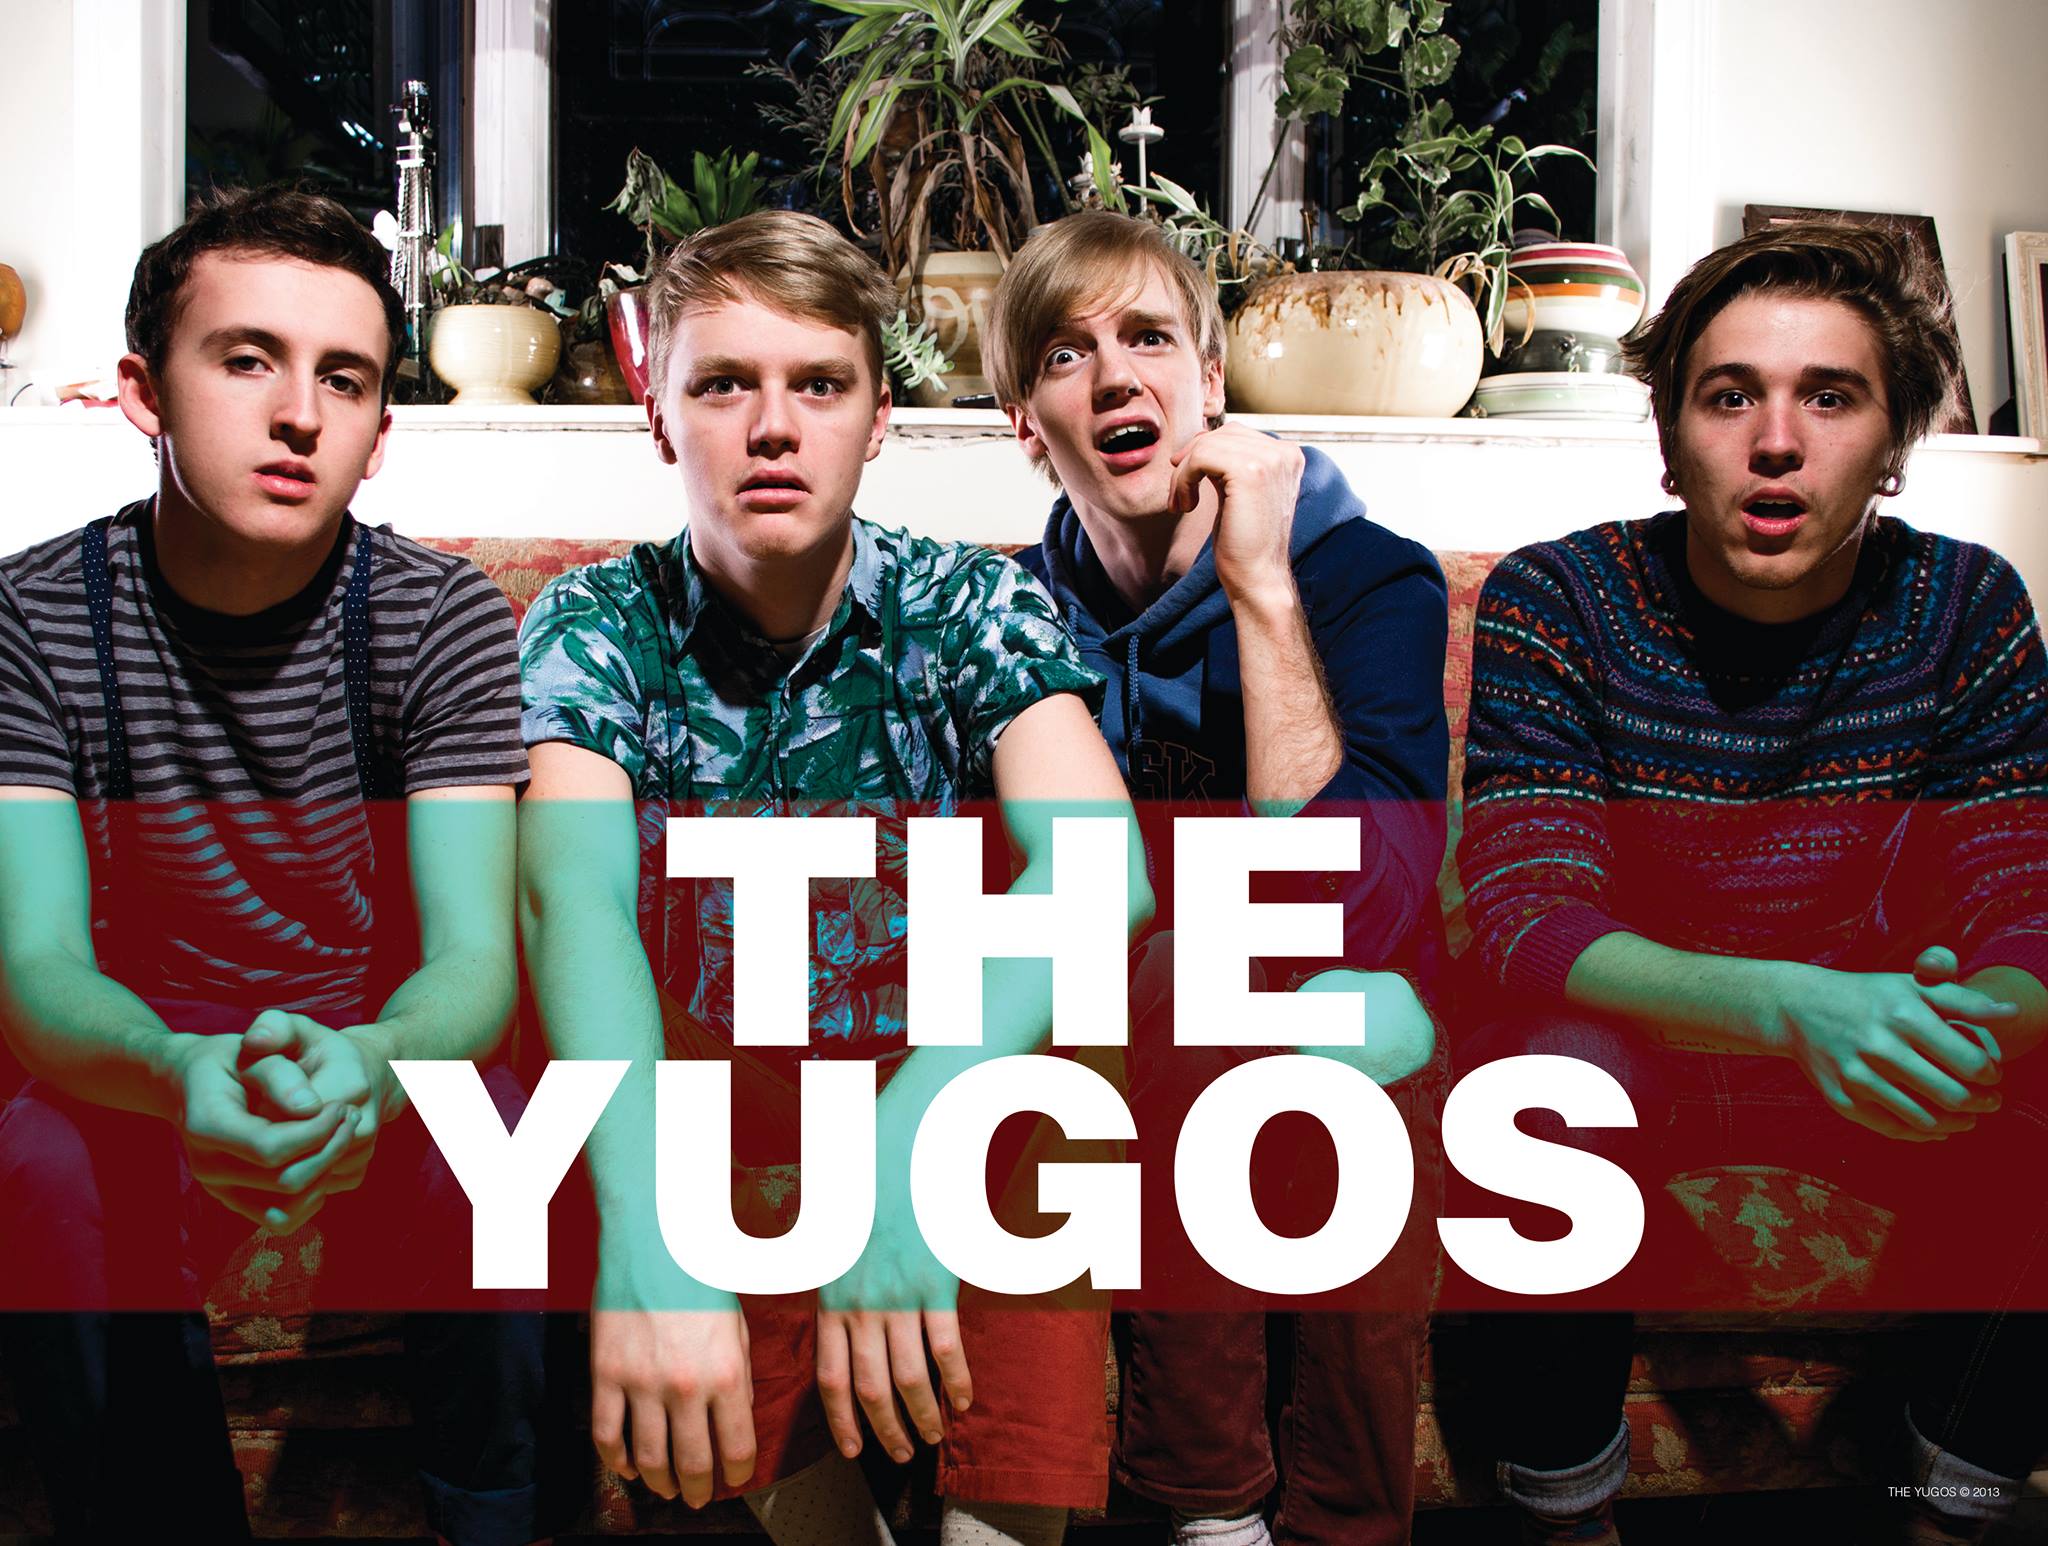 The Yugos band